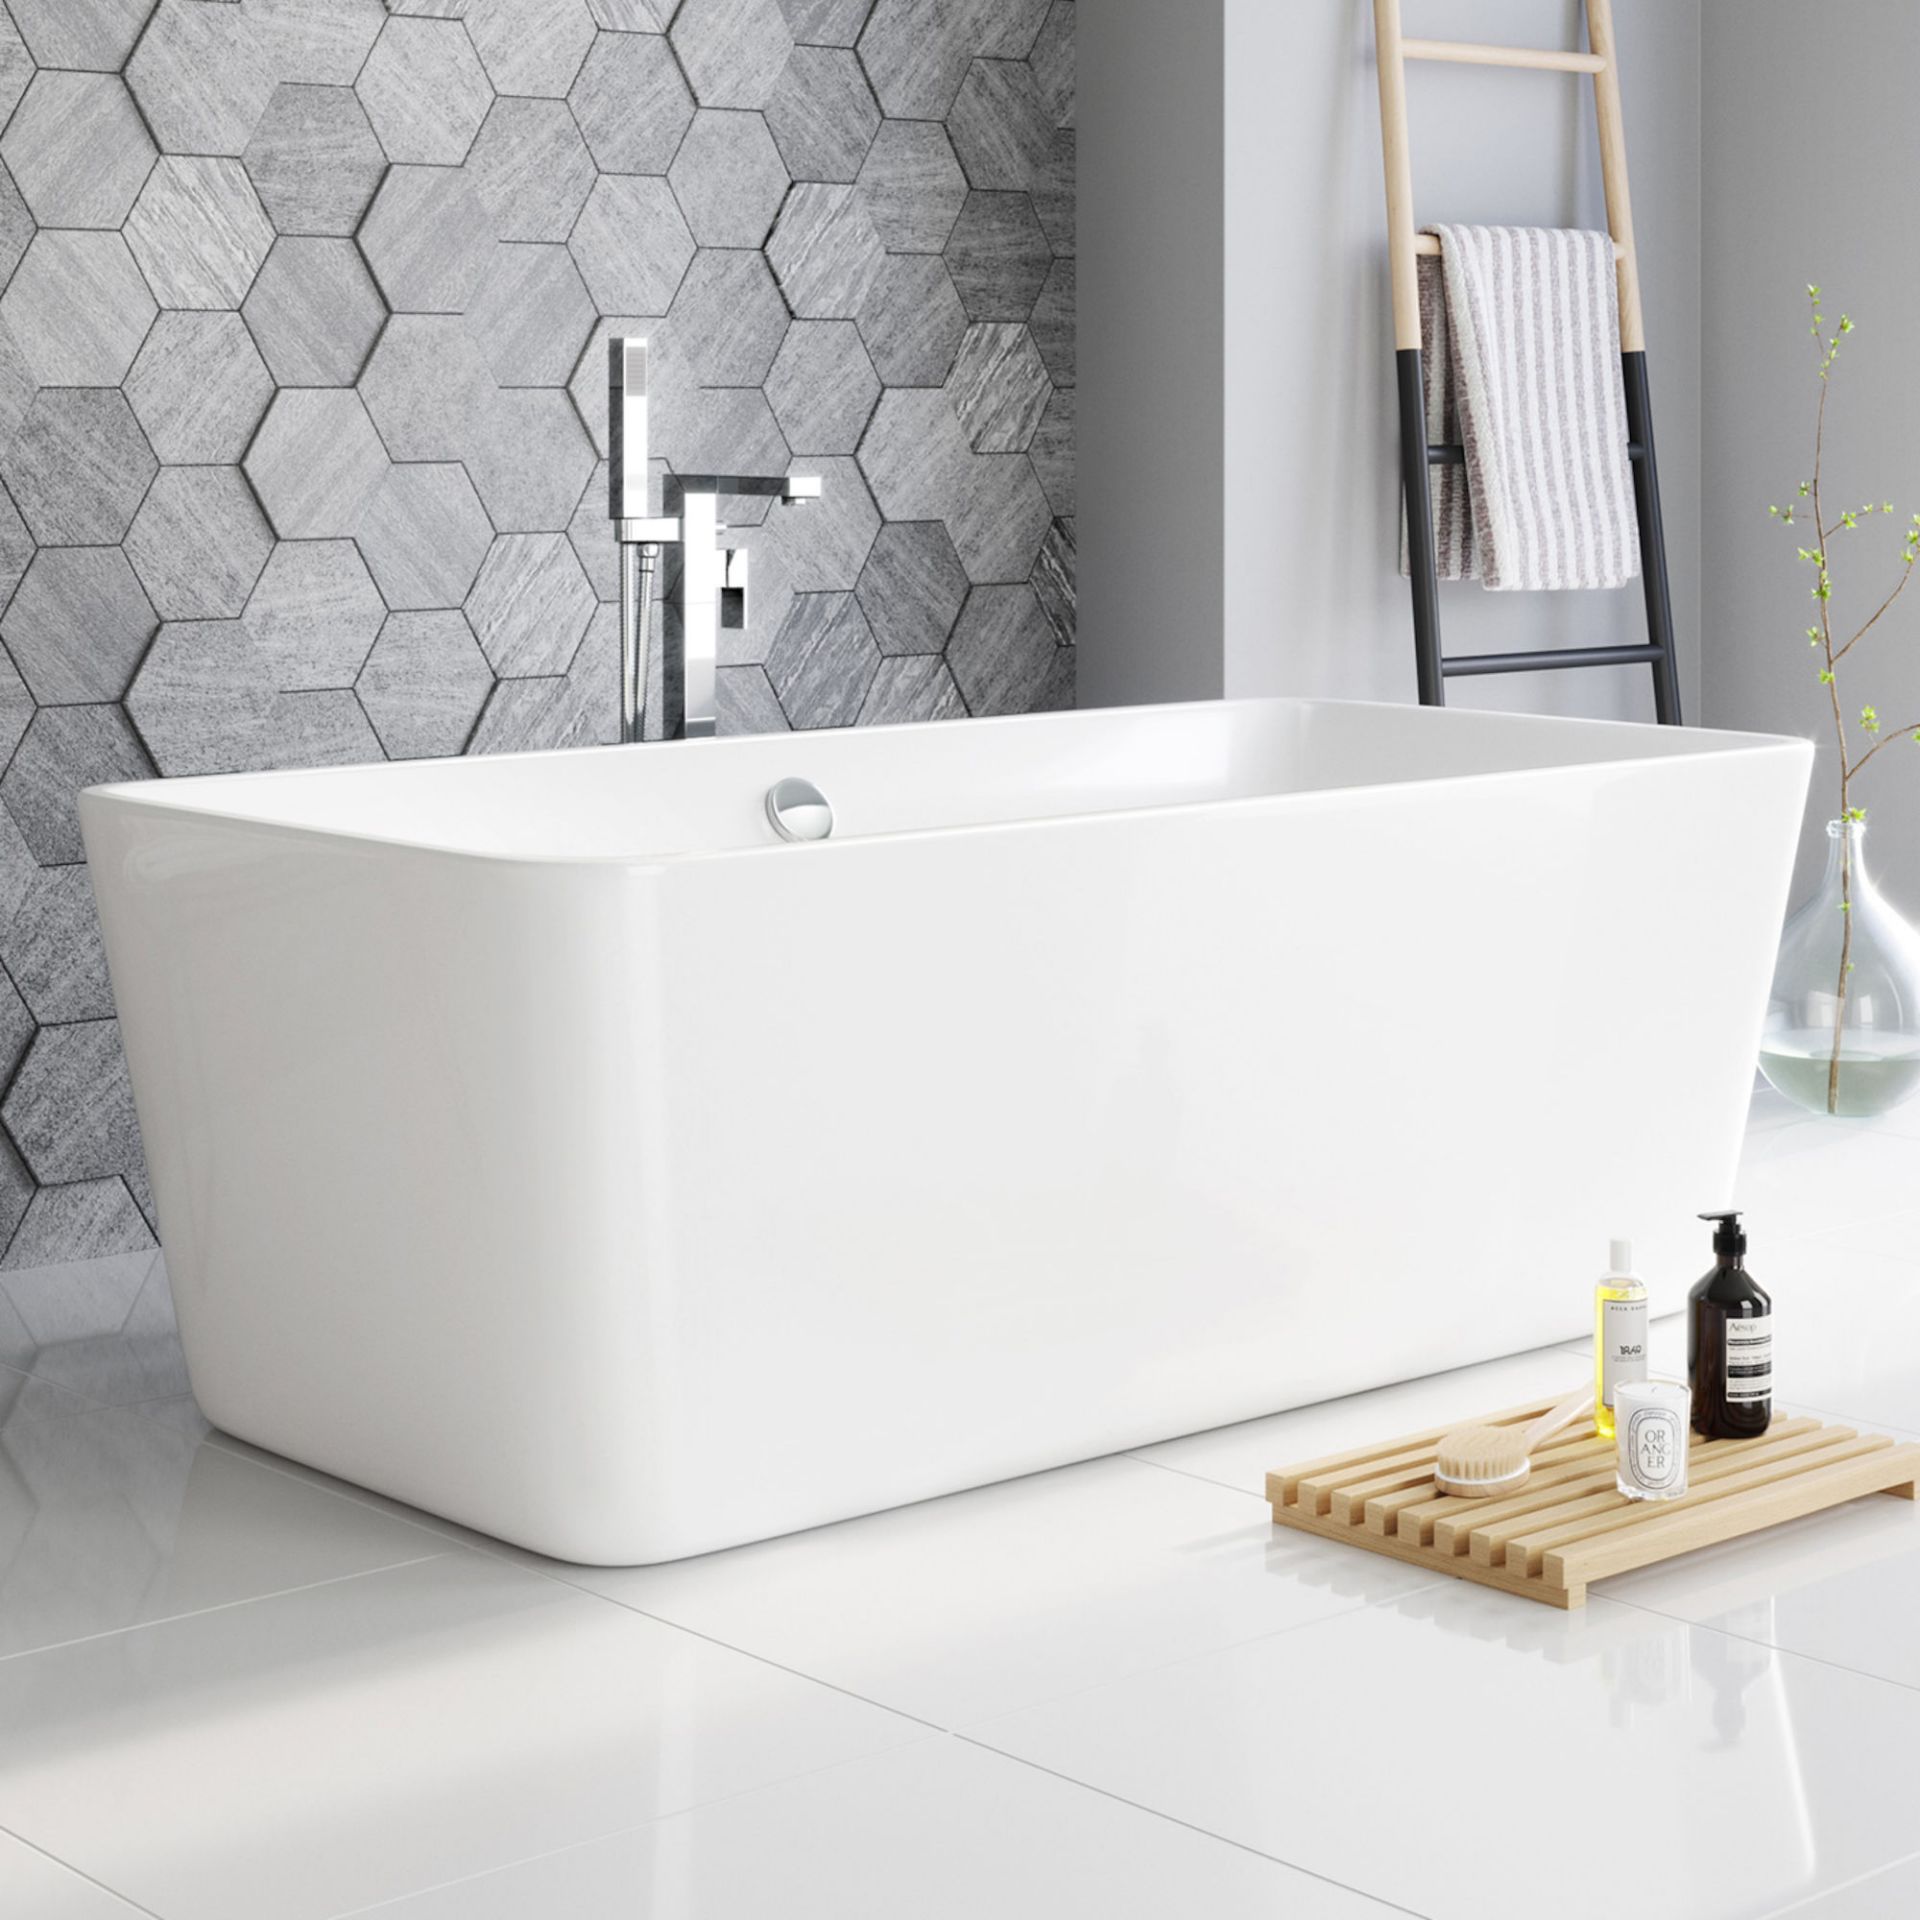 (CS3) 1700mmx845mm Skyla Freestanding Bath. Visually simplistic to suit any bathroom interior